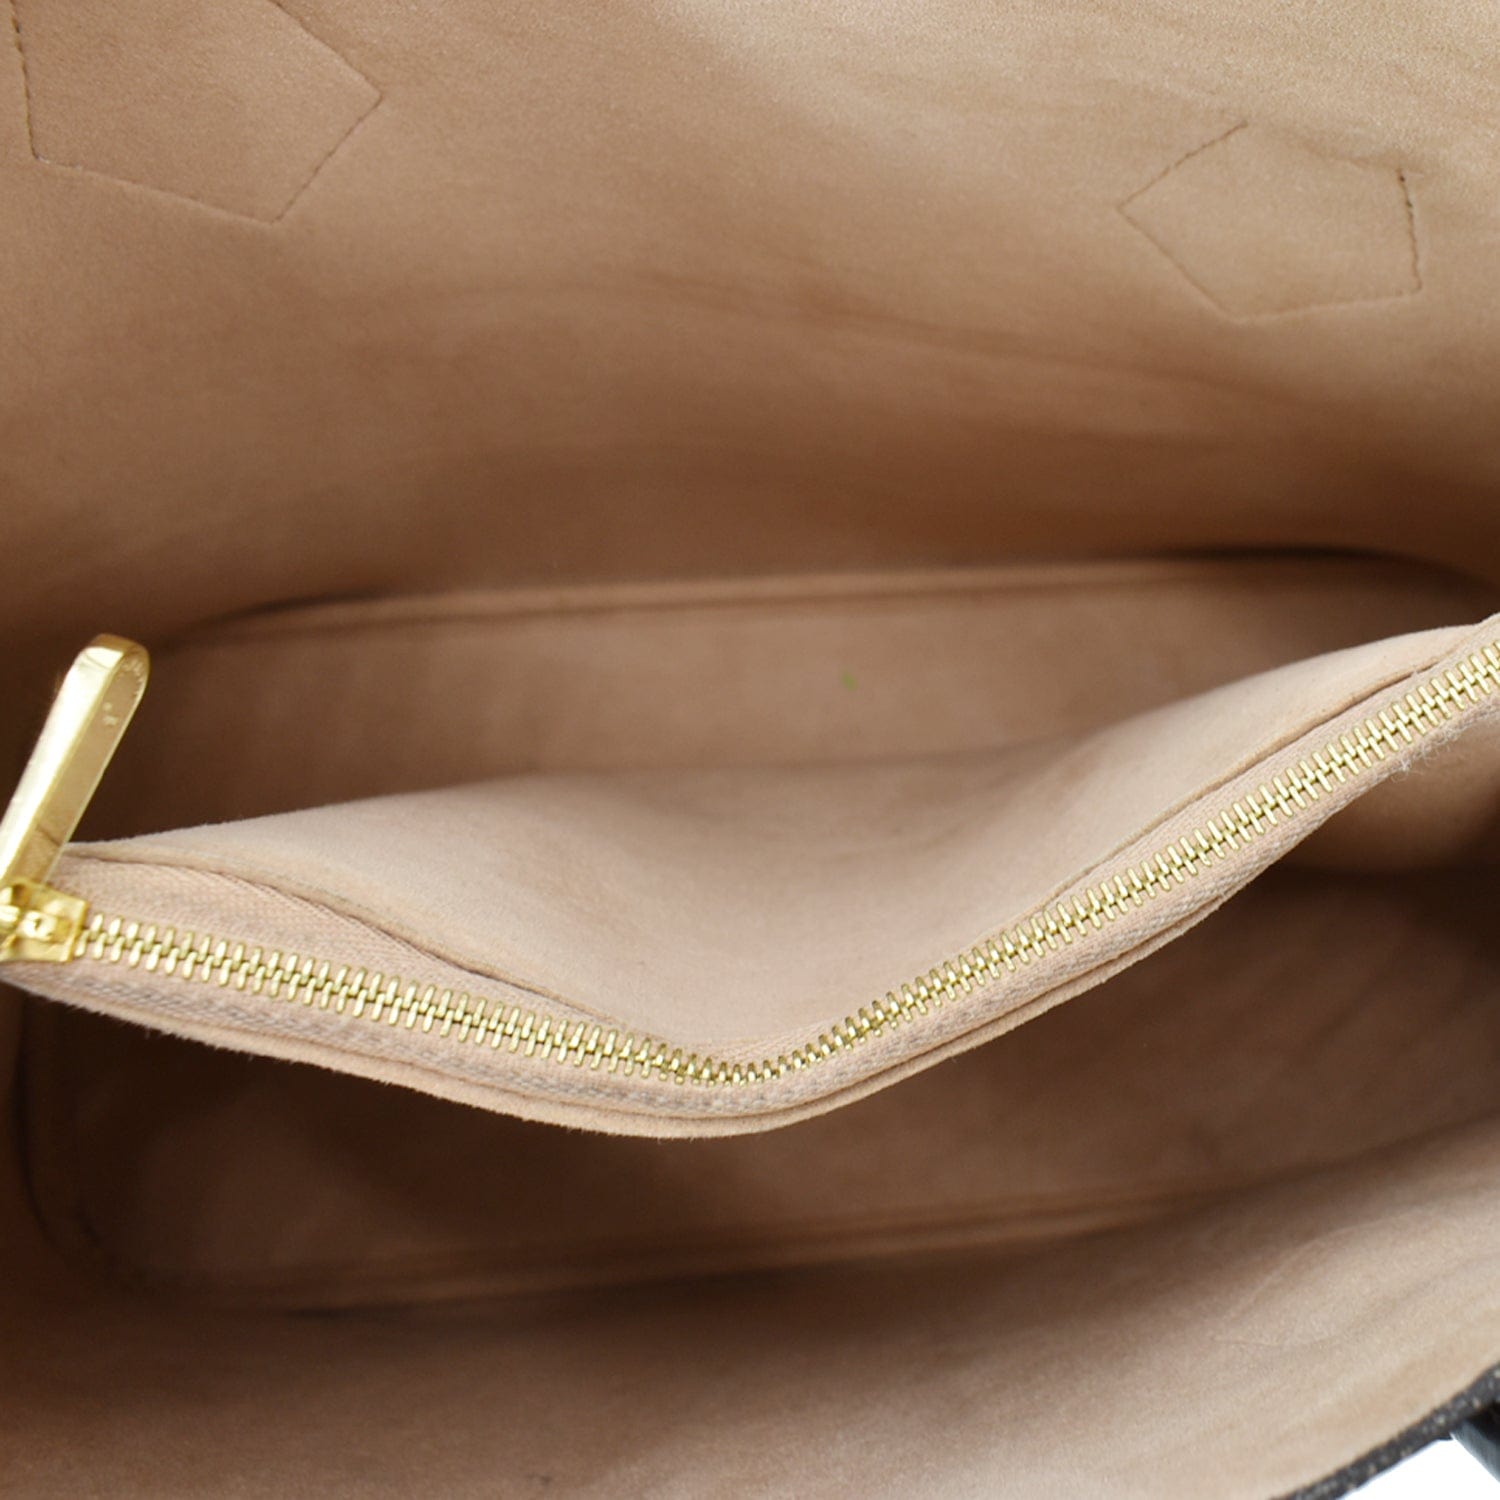 Louis Vuitton, Bags, Louis Vuitton Kensington Damier Ebene V Tote Hand  Bag